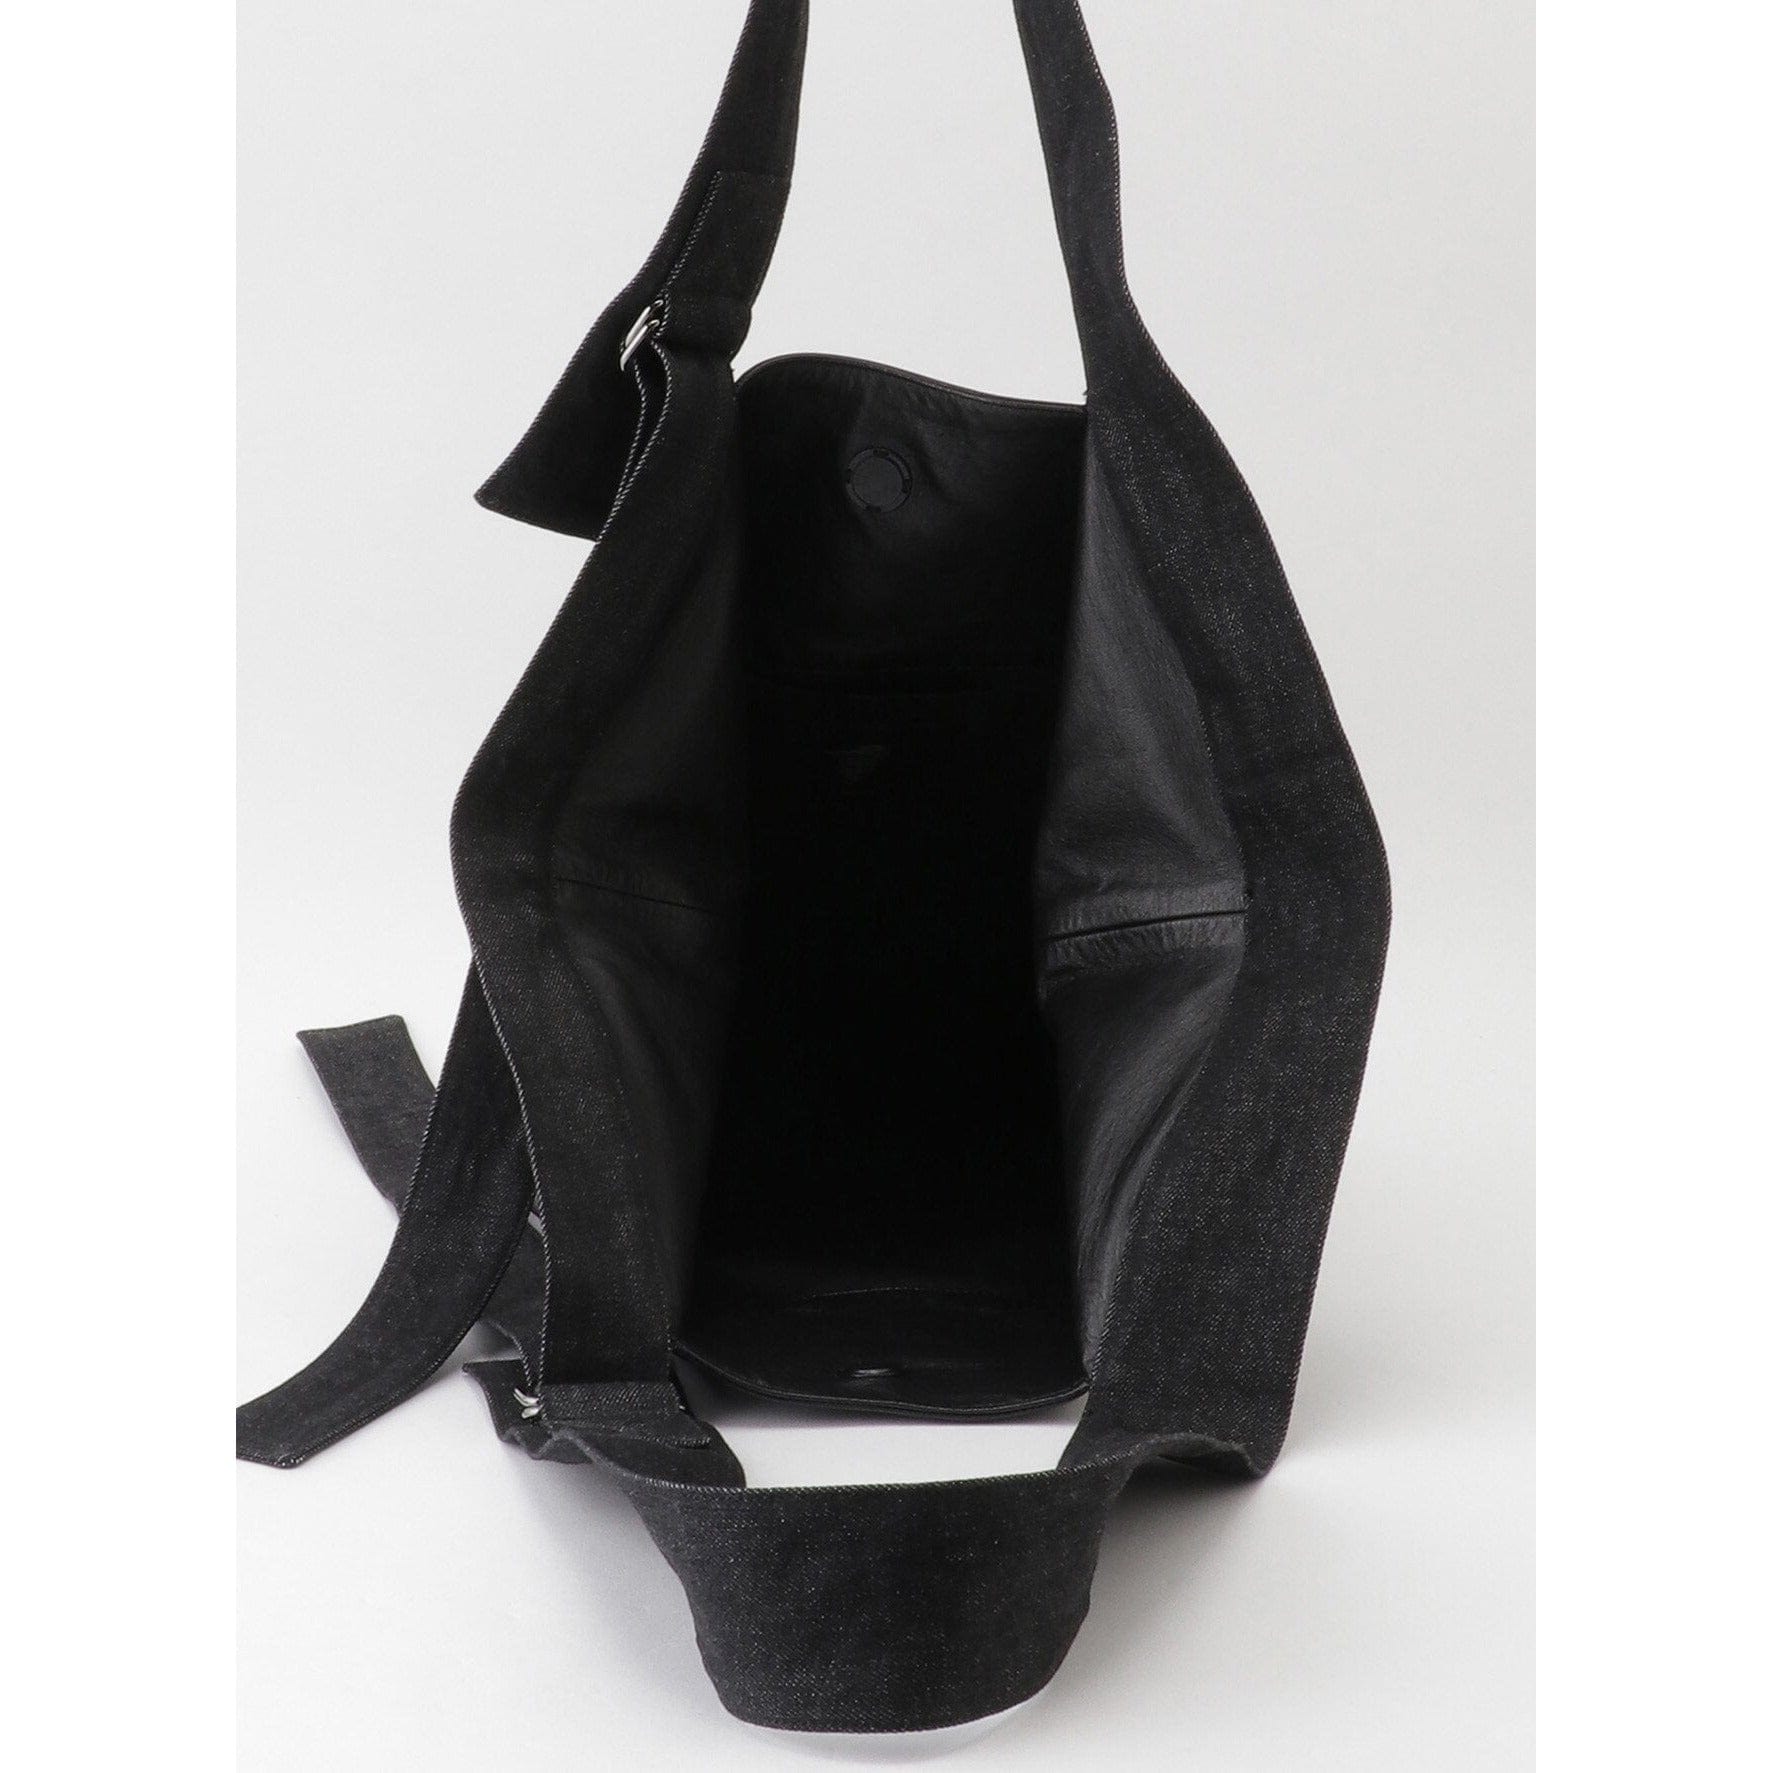 Yohji Yamamoto Handbags Black / Cow Leather / 30cm x 27cm x 11cm Yohji Yamamoto Belt Tote Bag